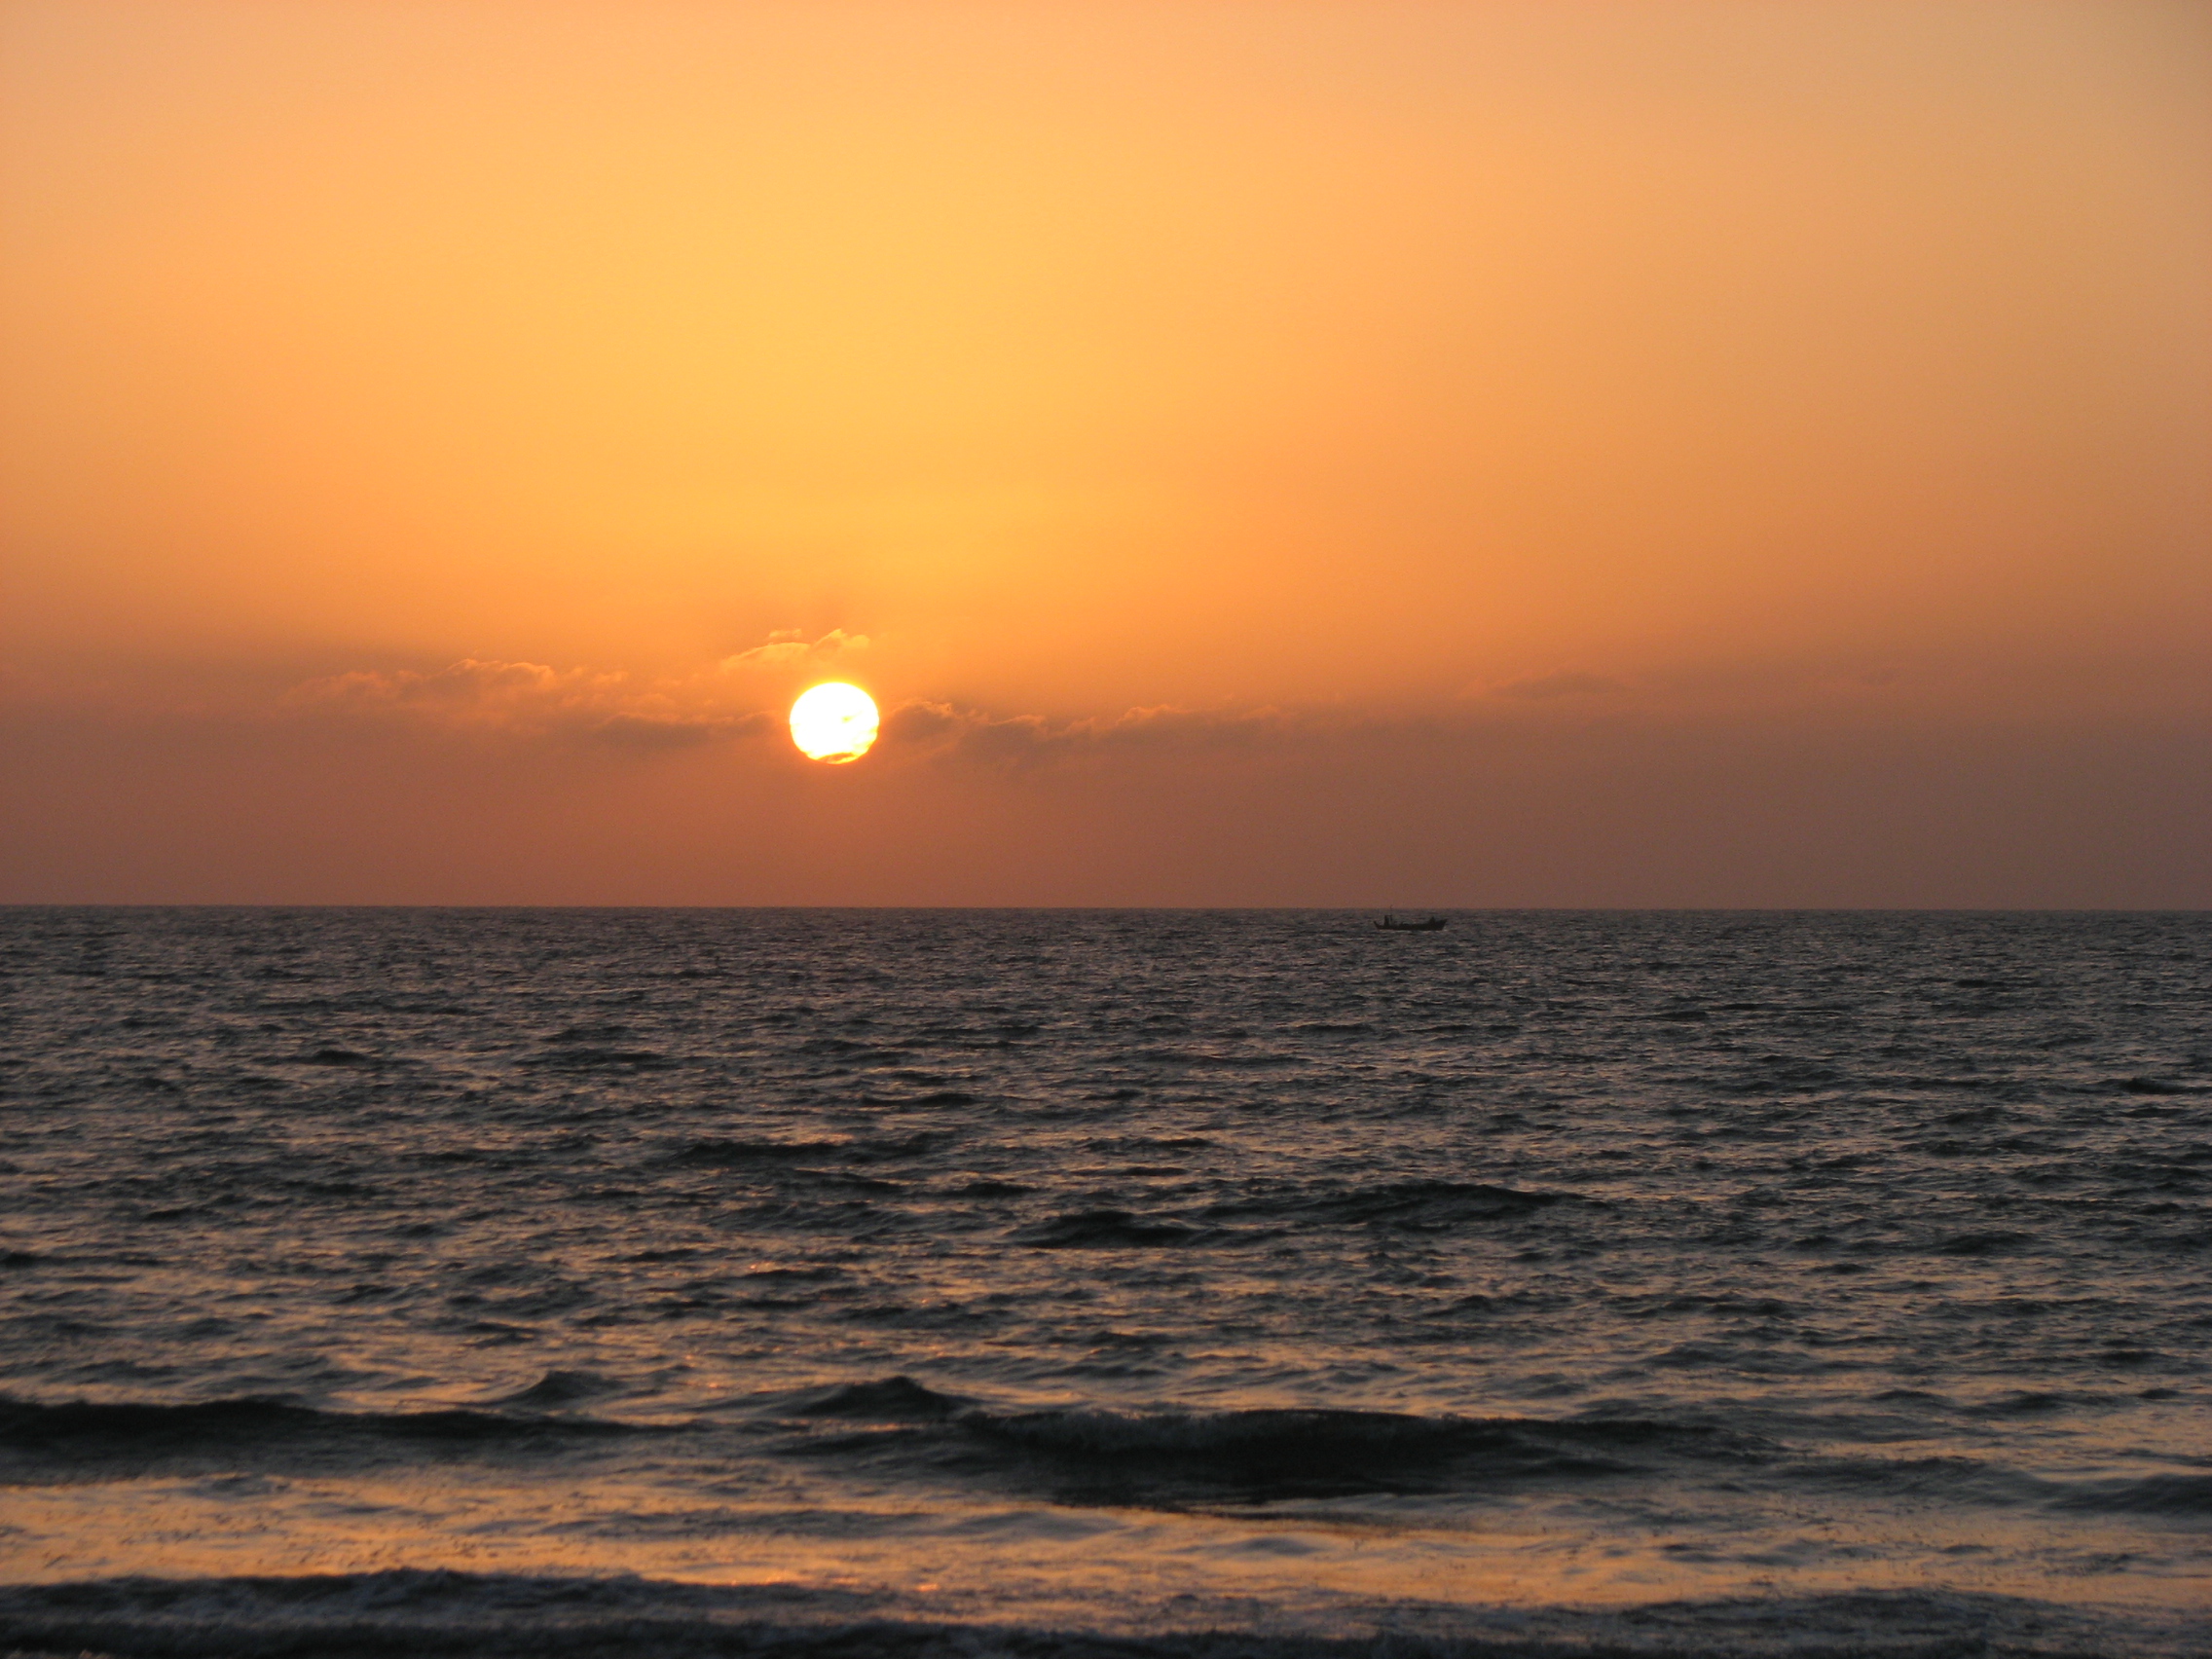 Sunset at karachi beach photo